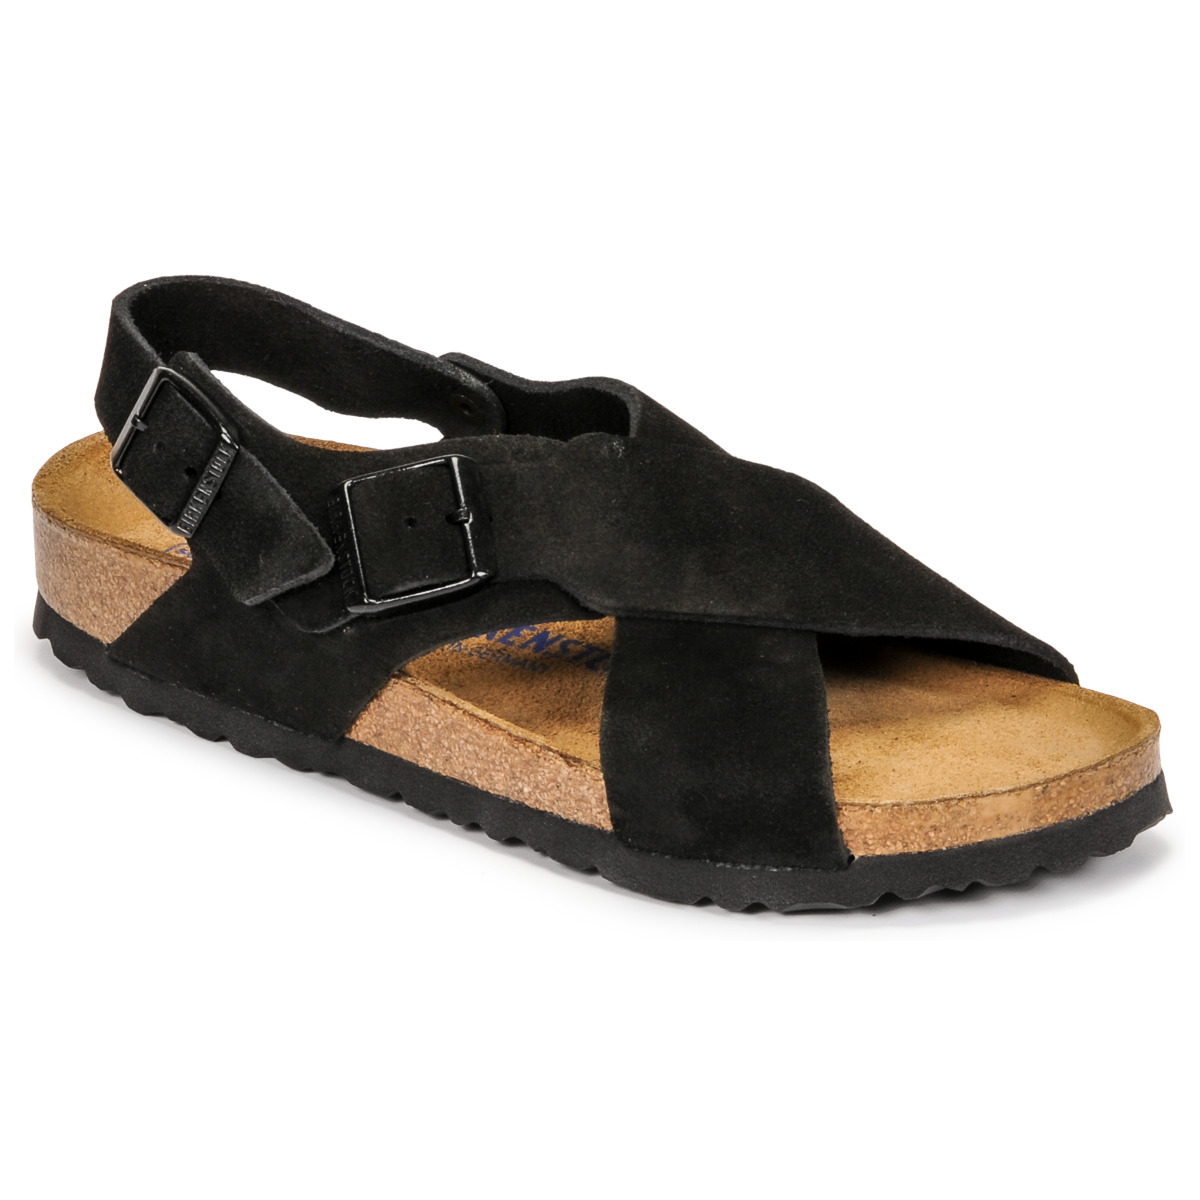 Shoes Women Sandals Birkenstock TULUM SFB Black